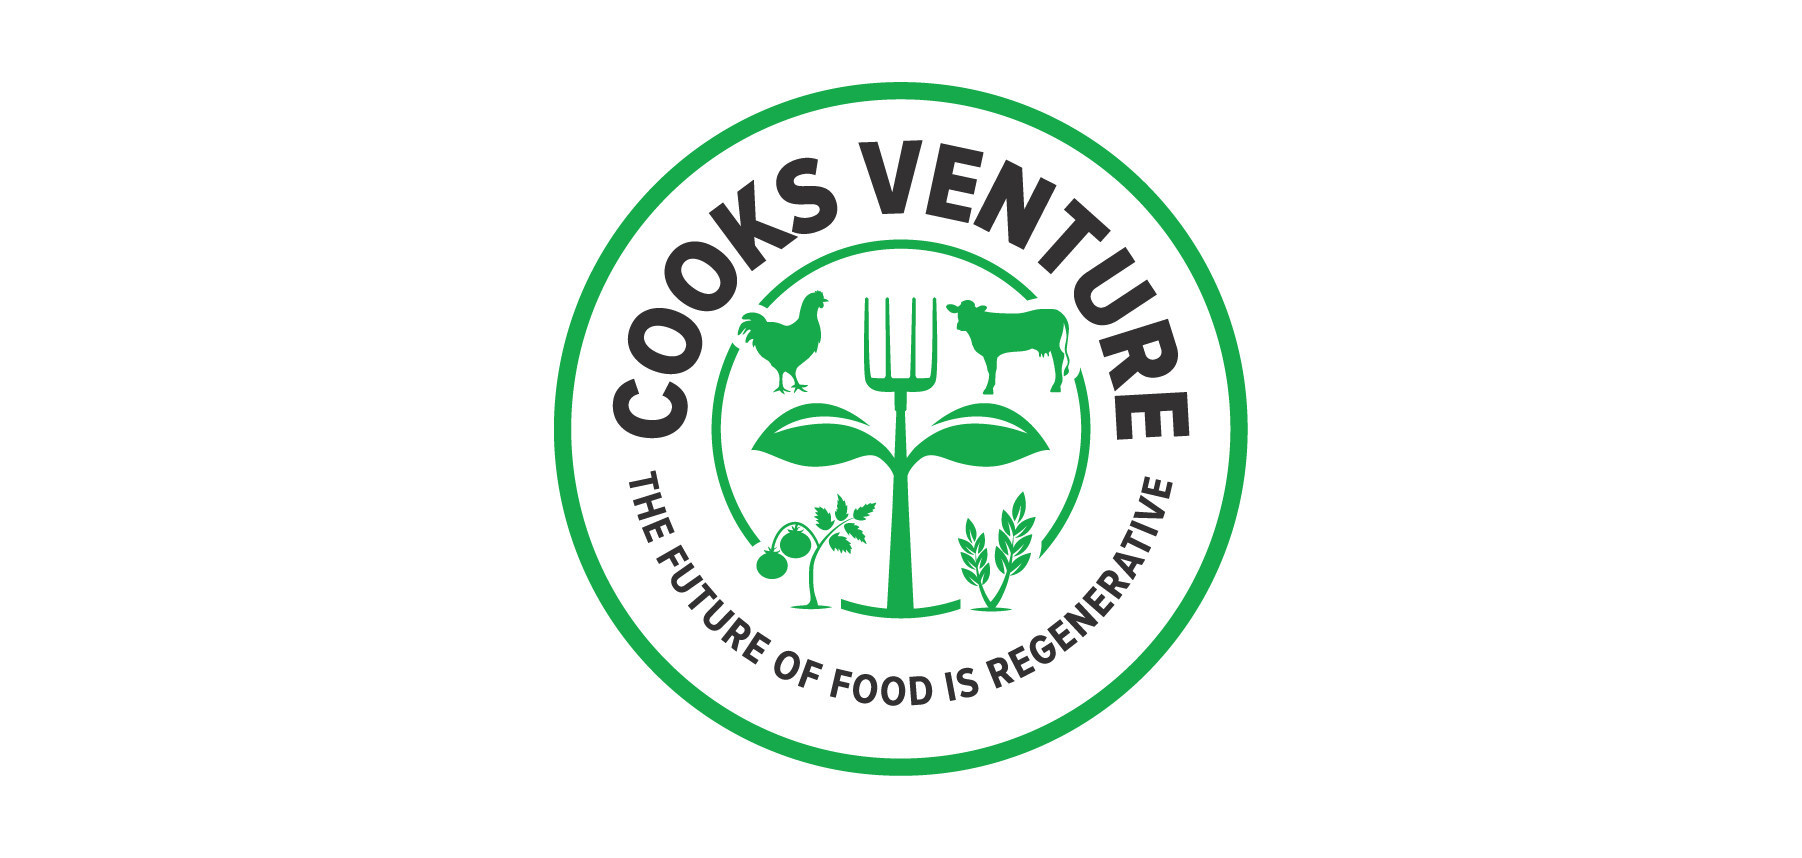 Blue Apron founder launches Cooks Venture